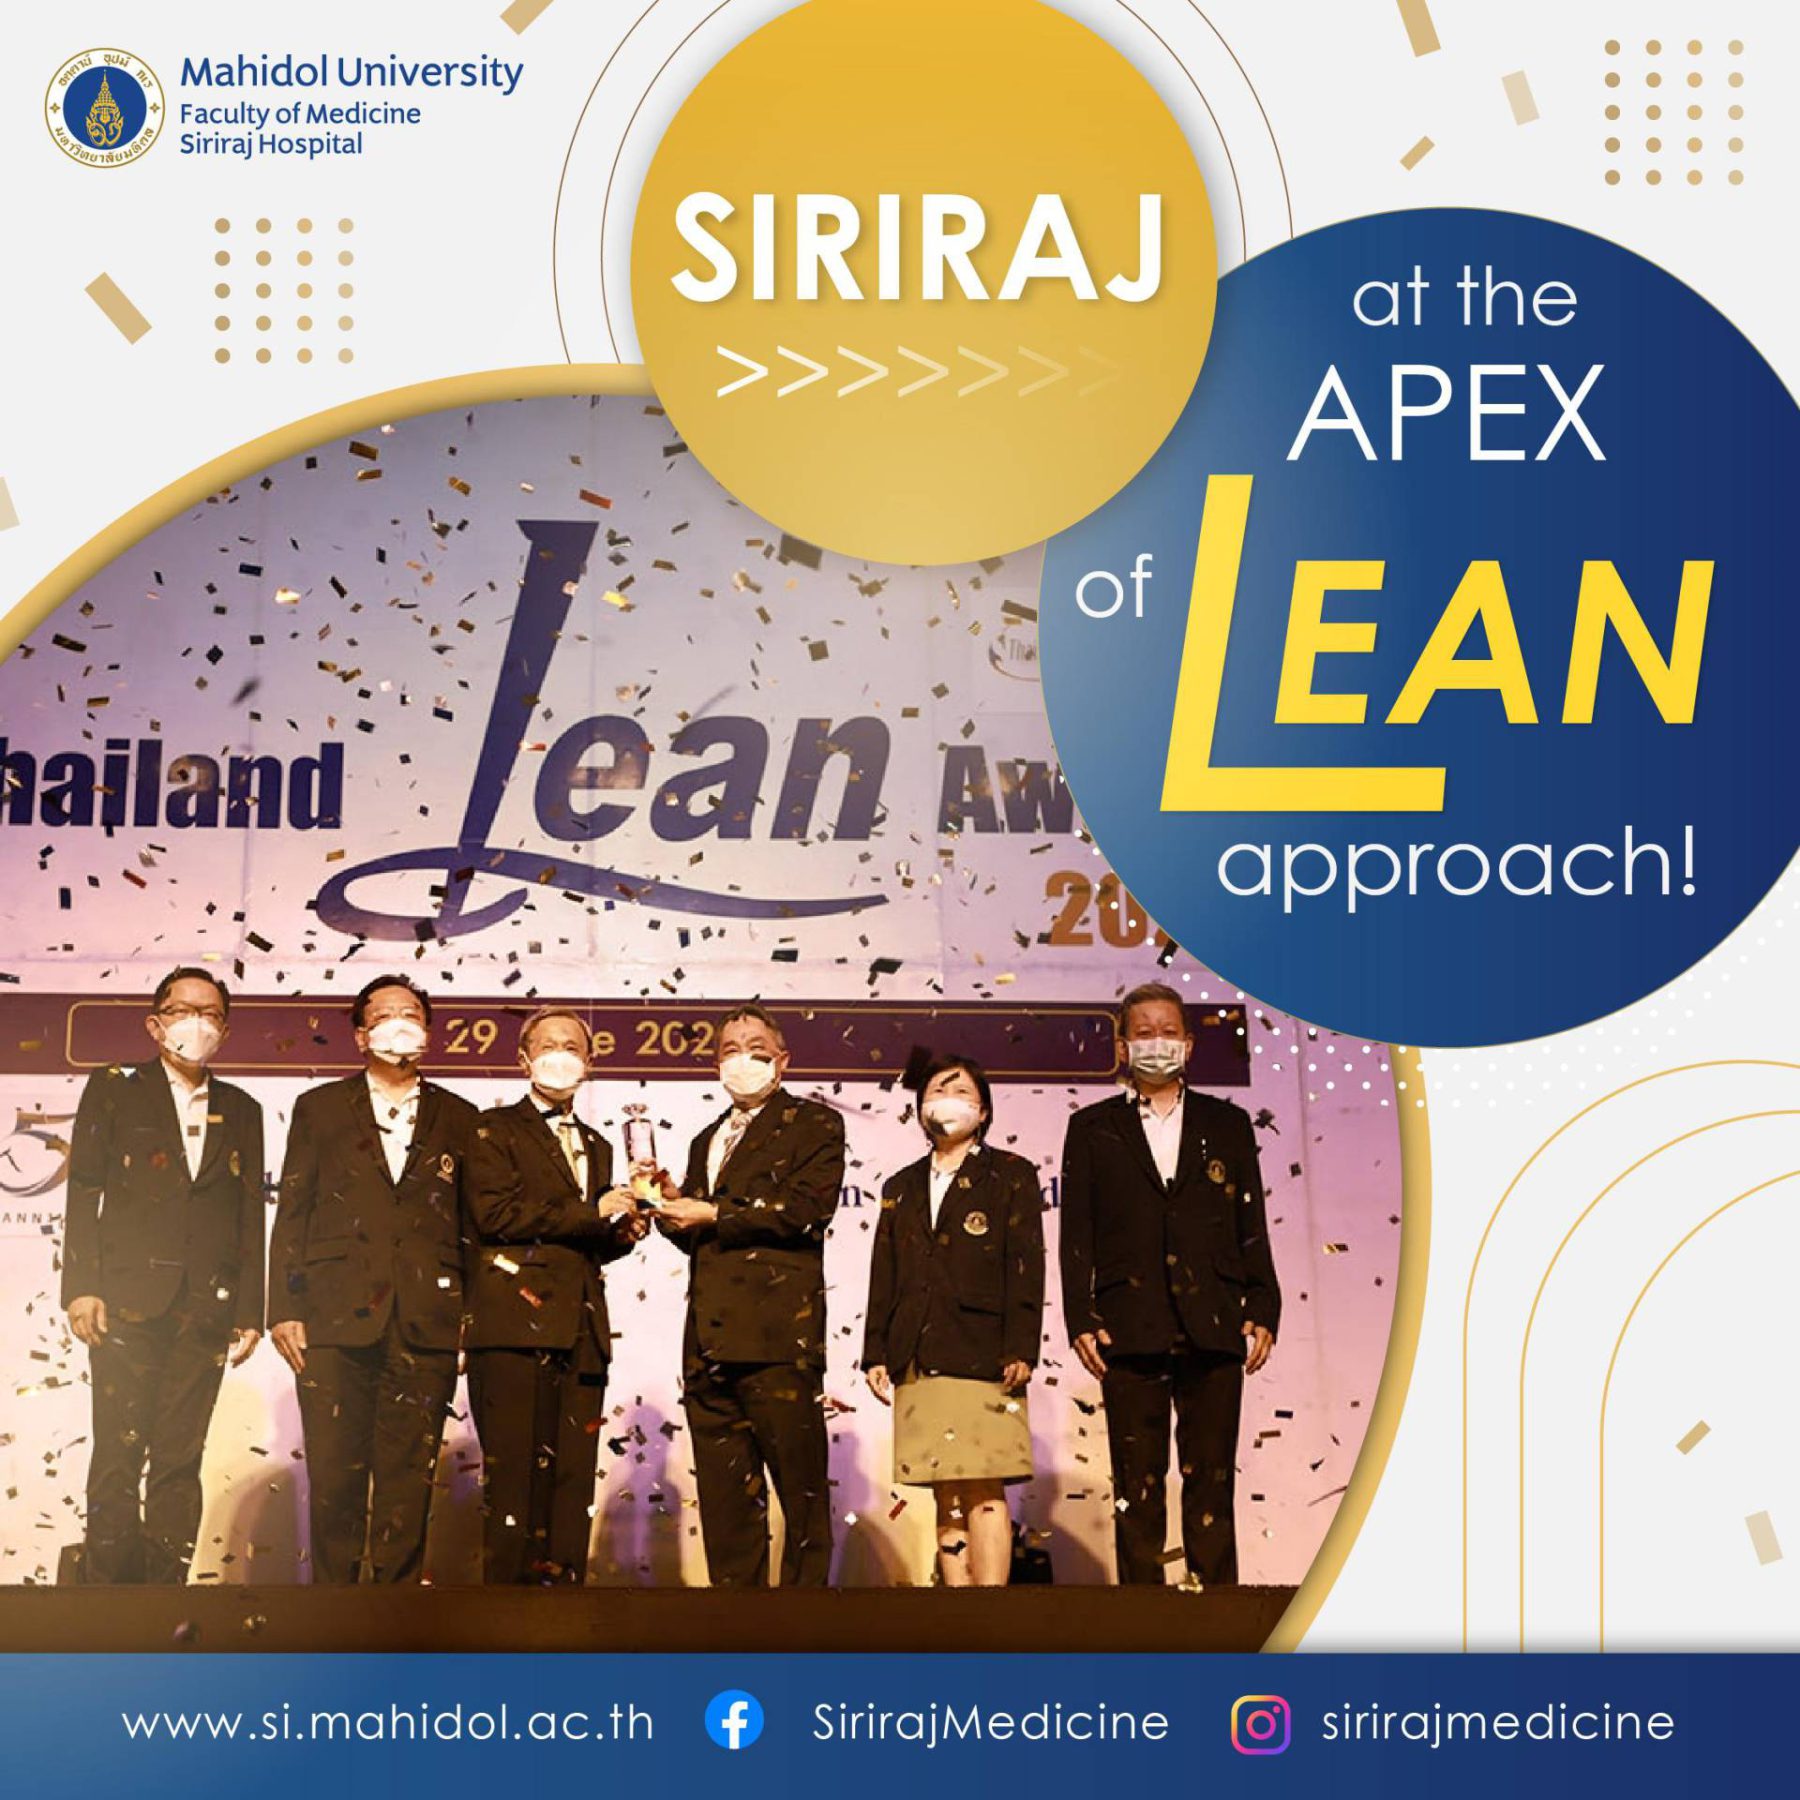 Siriraj at the Apex of LEAN Approach!